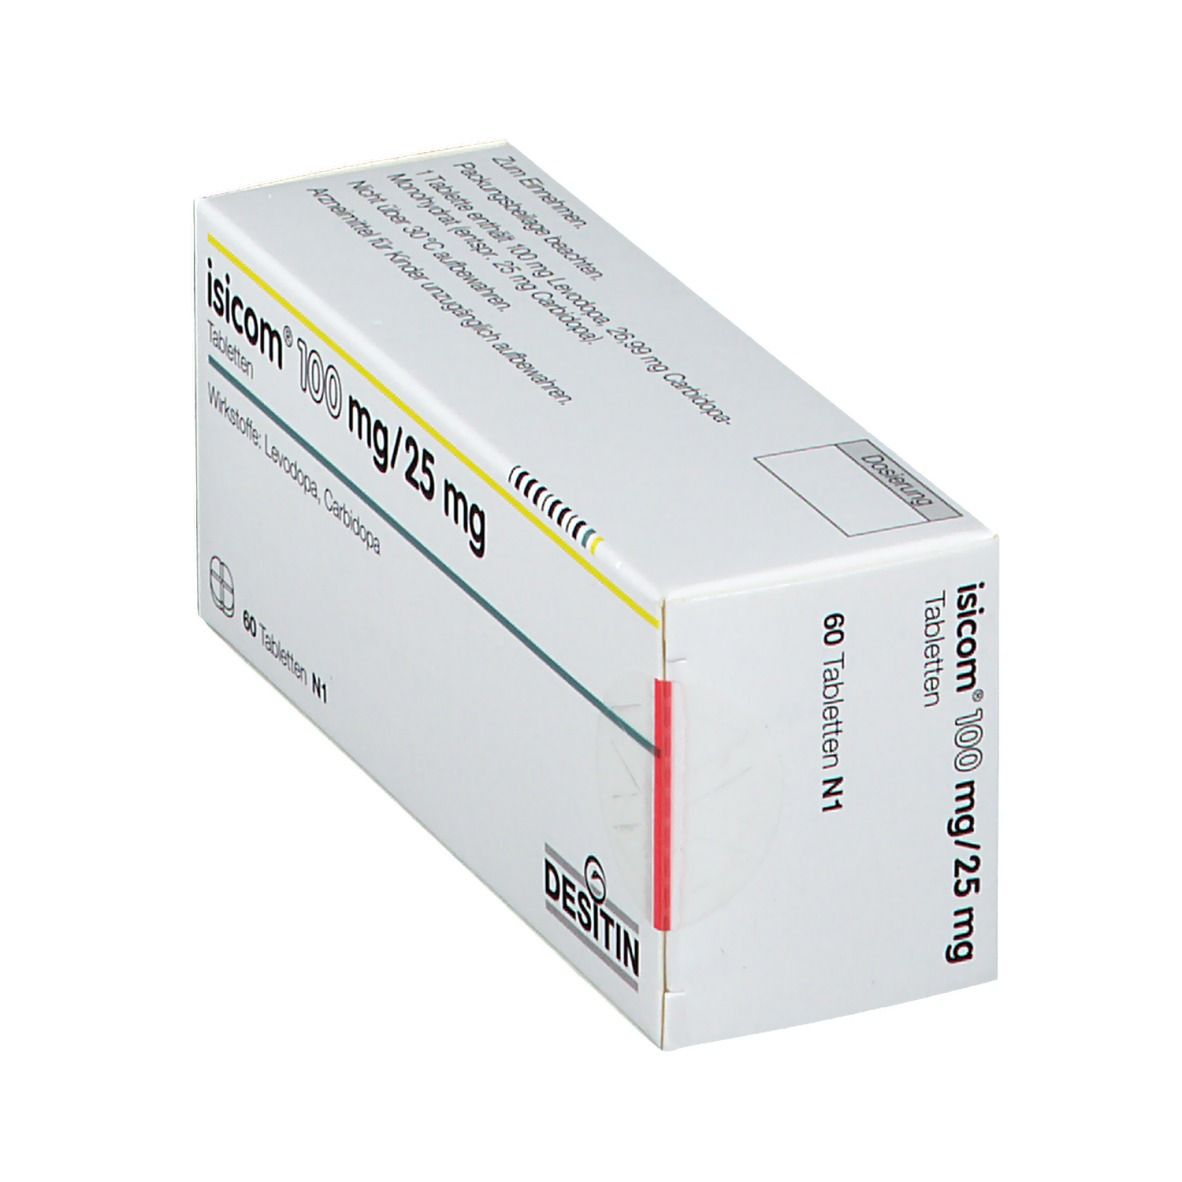 isicom® 100 mg/25 mg